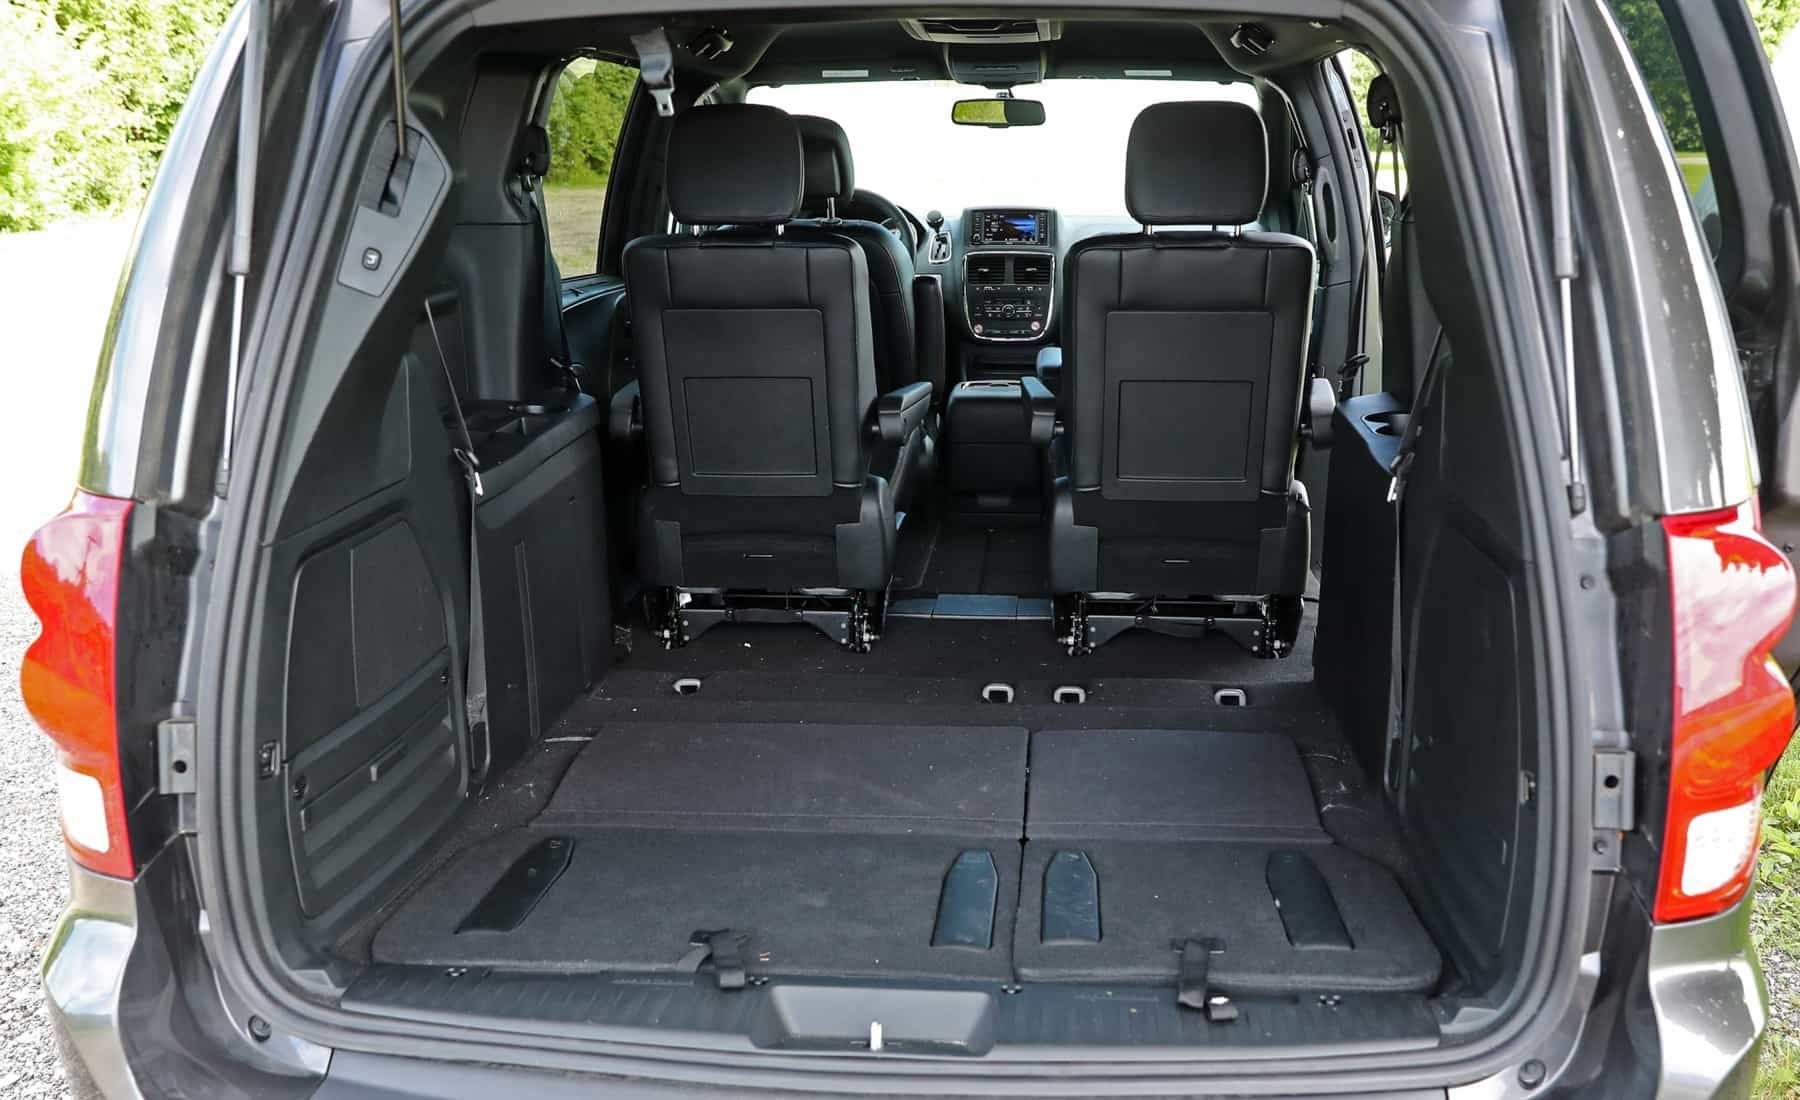 2017 Dodge Grand Caravan Interior View Cargo Seats Folded (View 24 of 47)